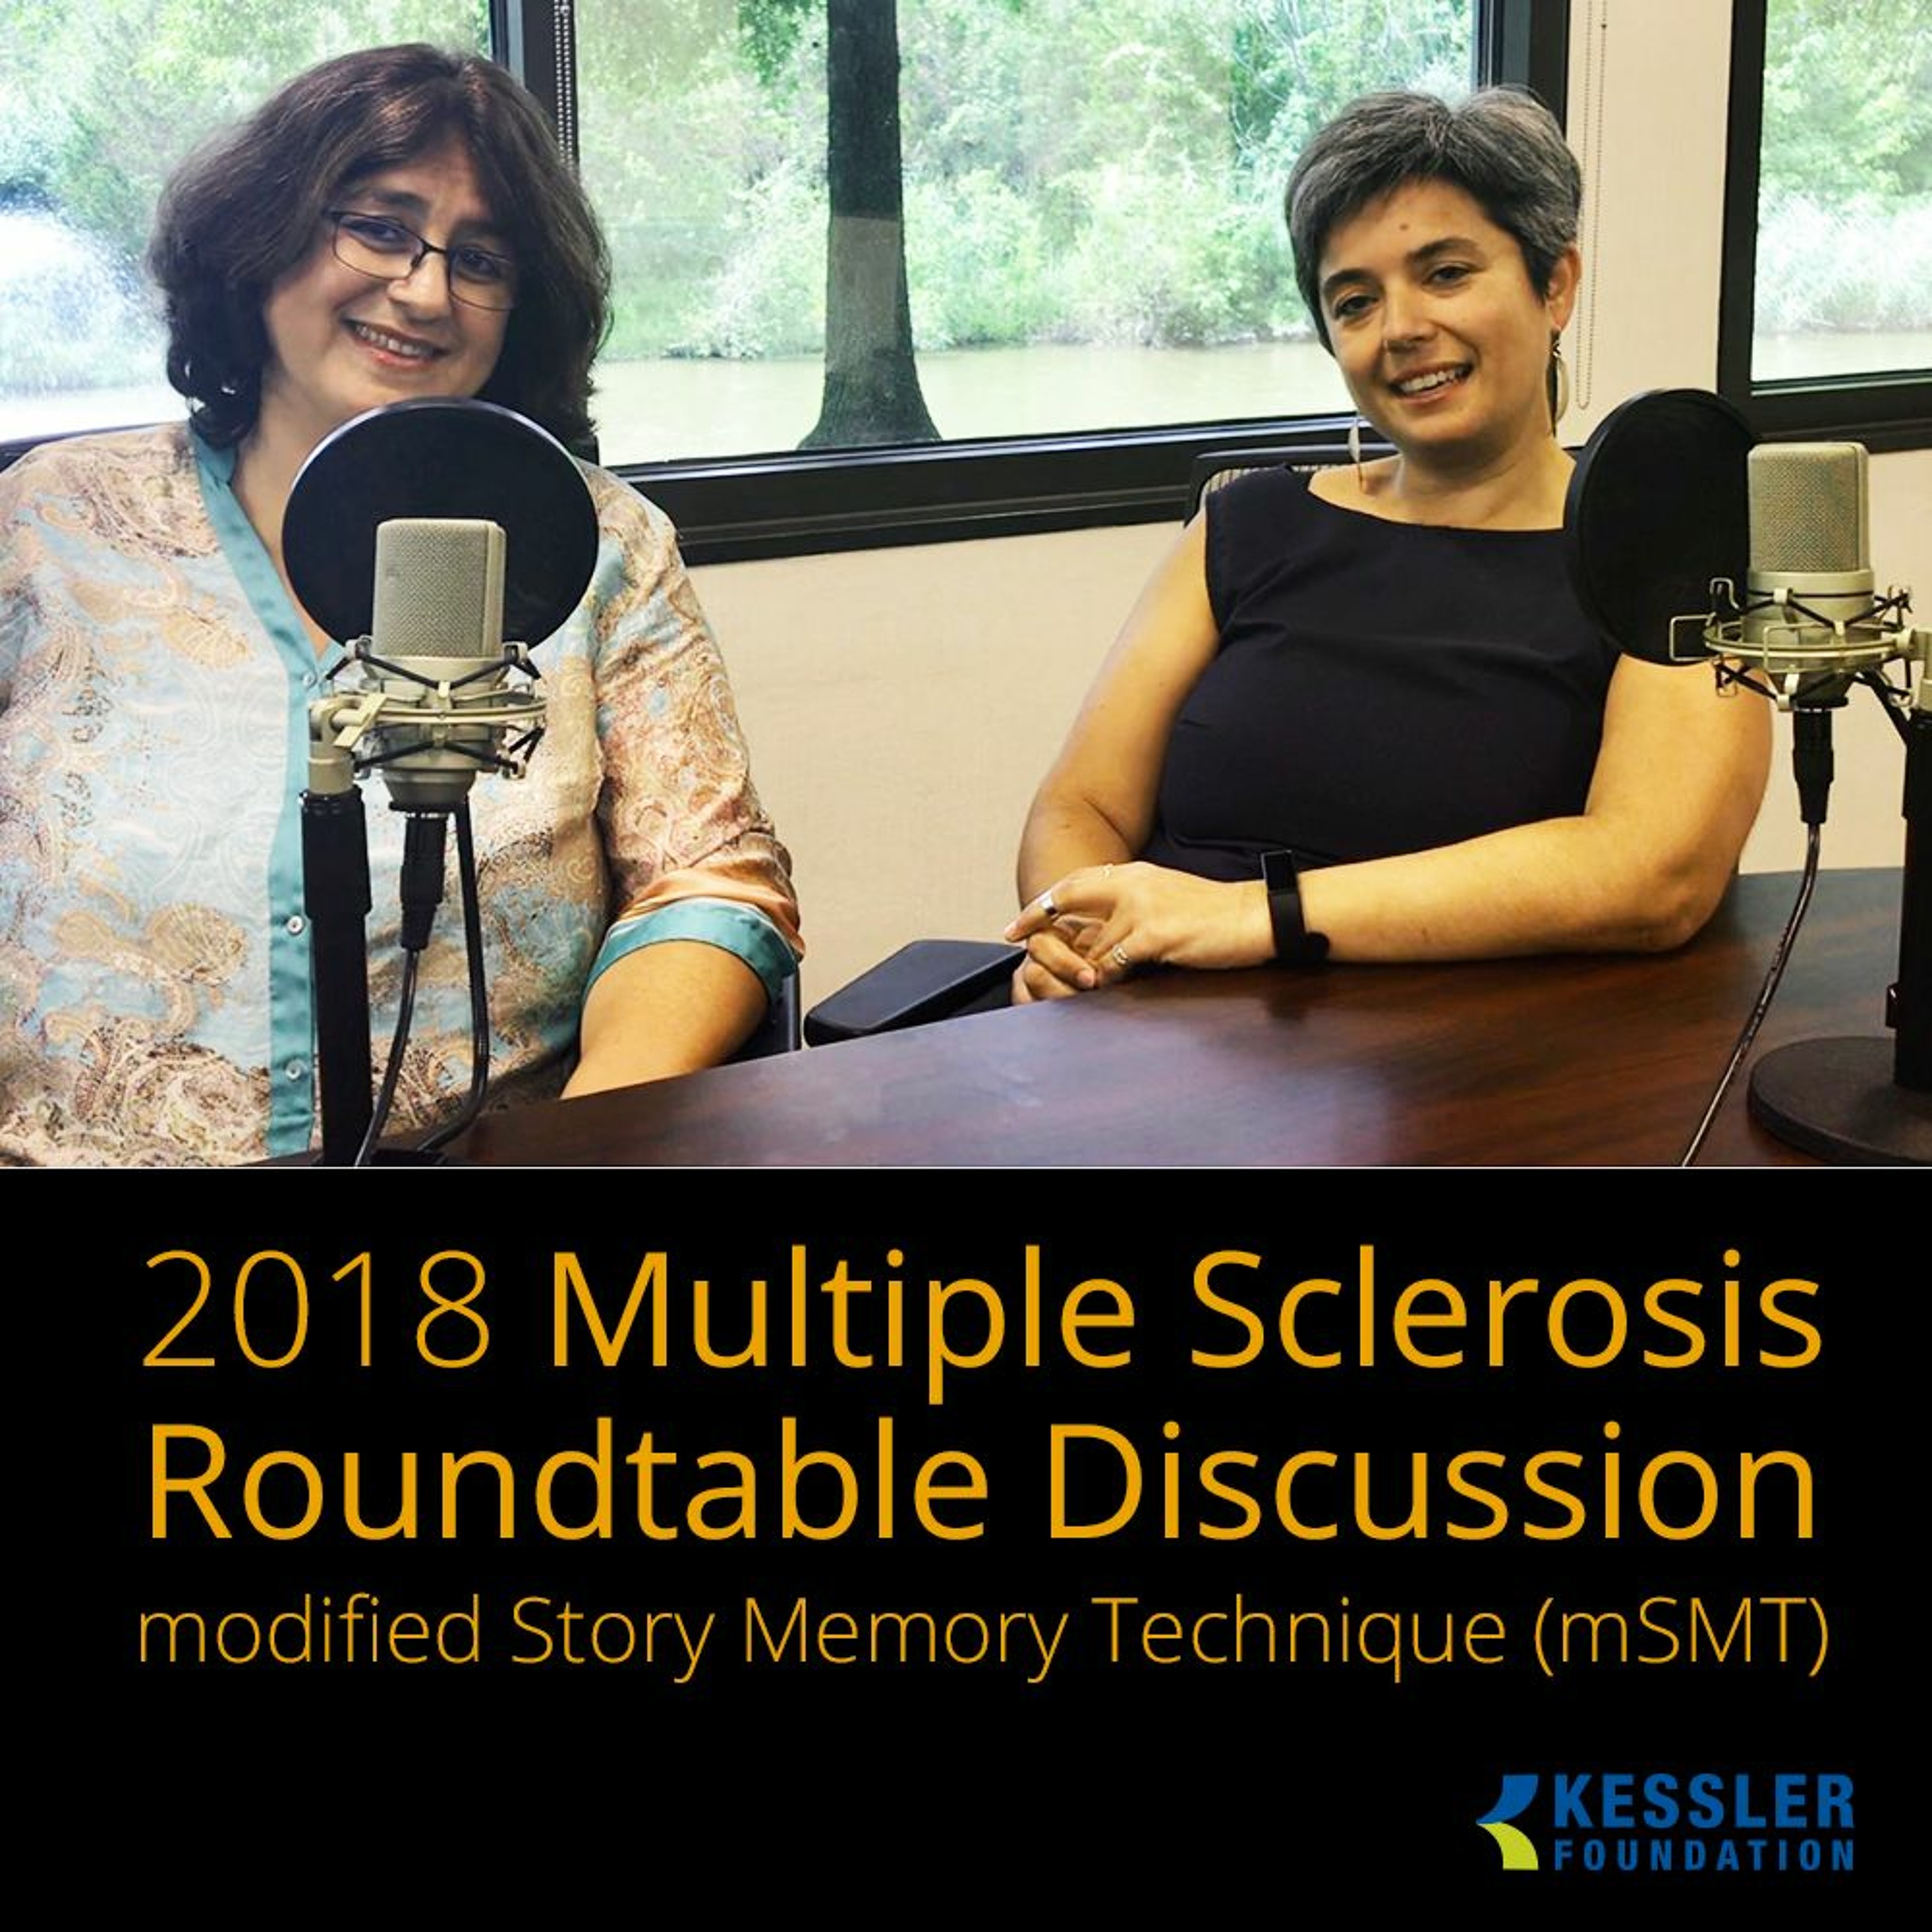 Multiple Sclerosis RoundTable with Fabiola Garcia, PhD and Yolanda Higueras, PhD